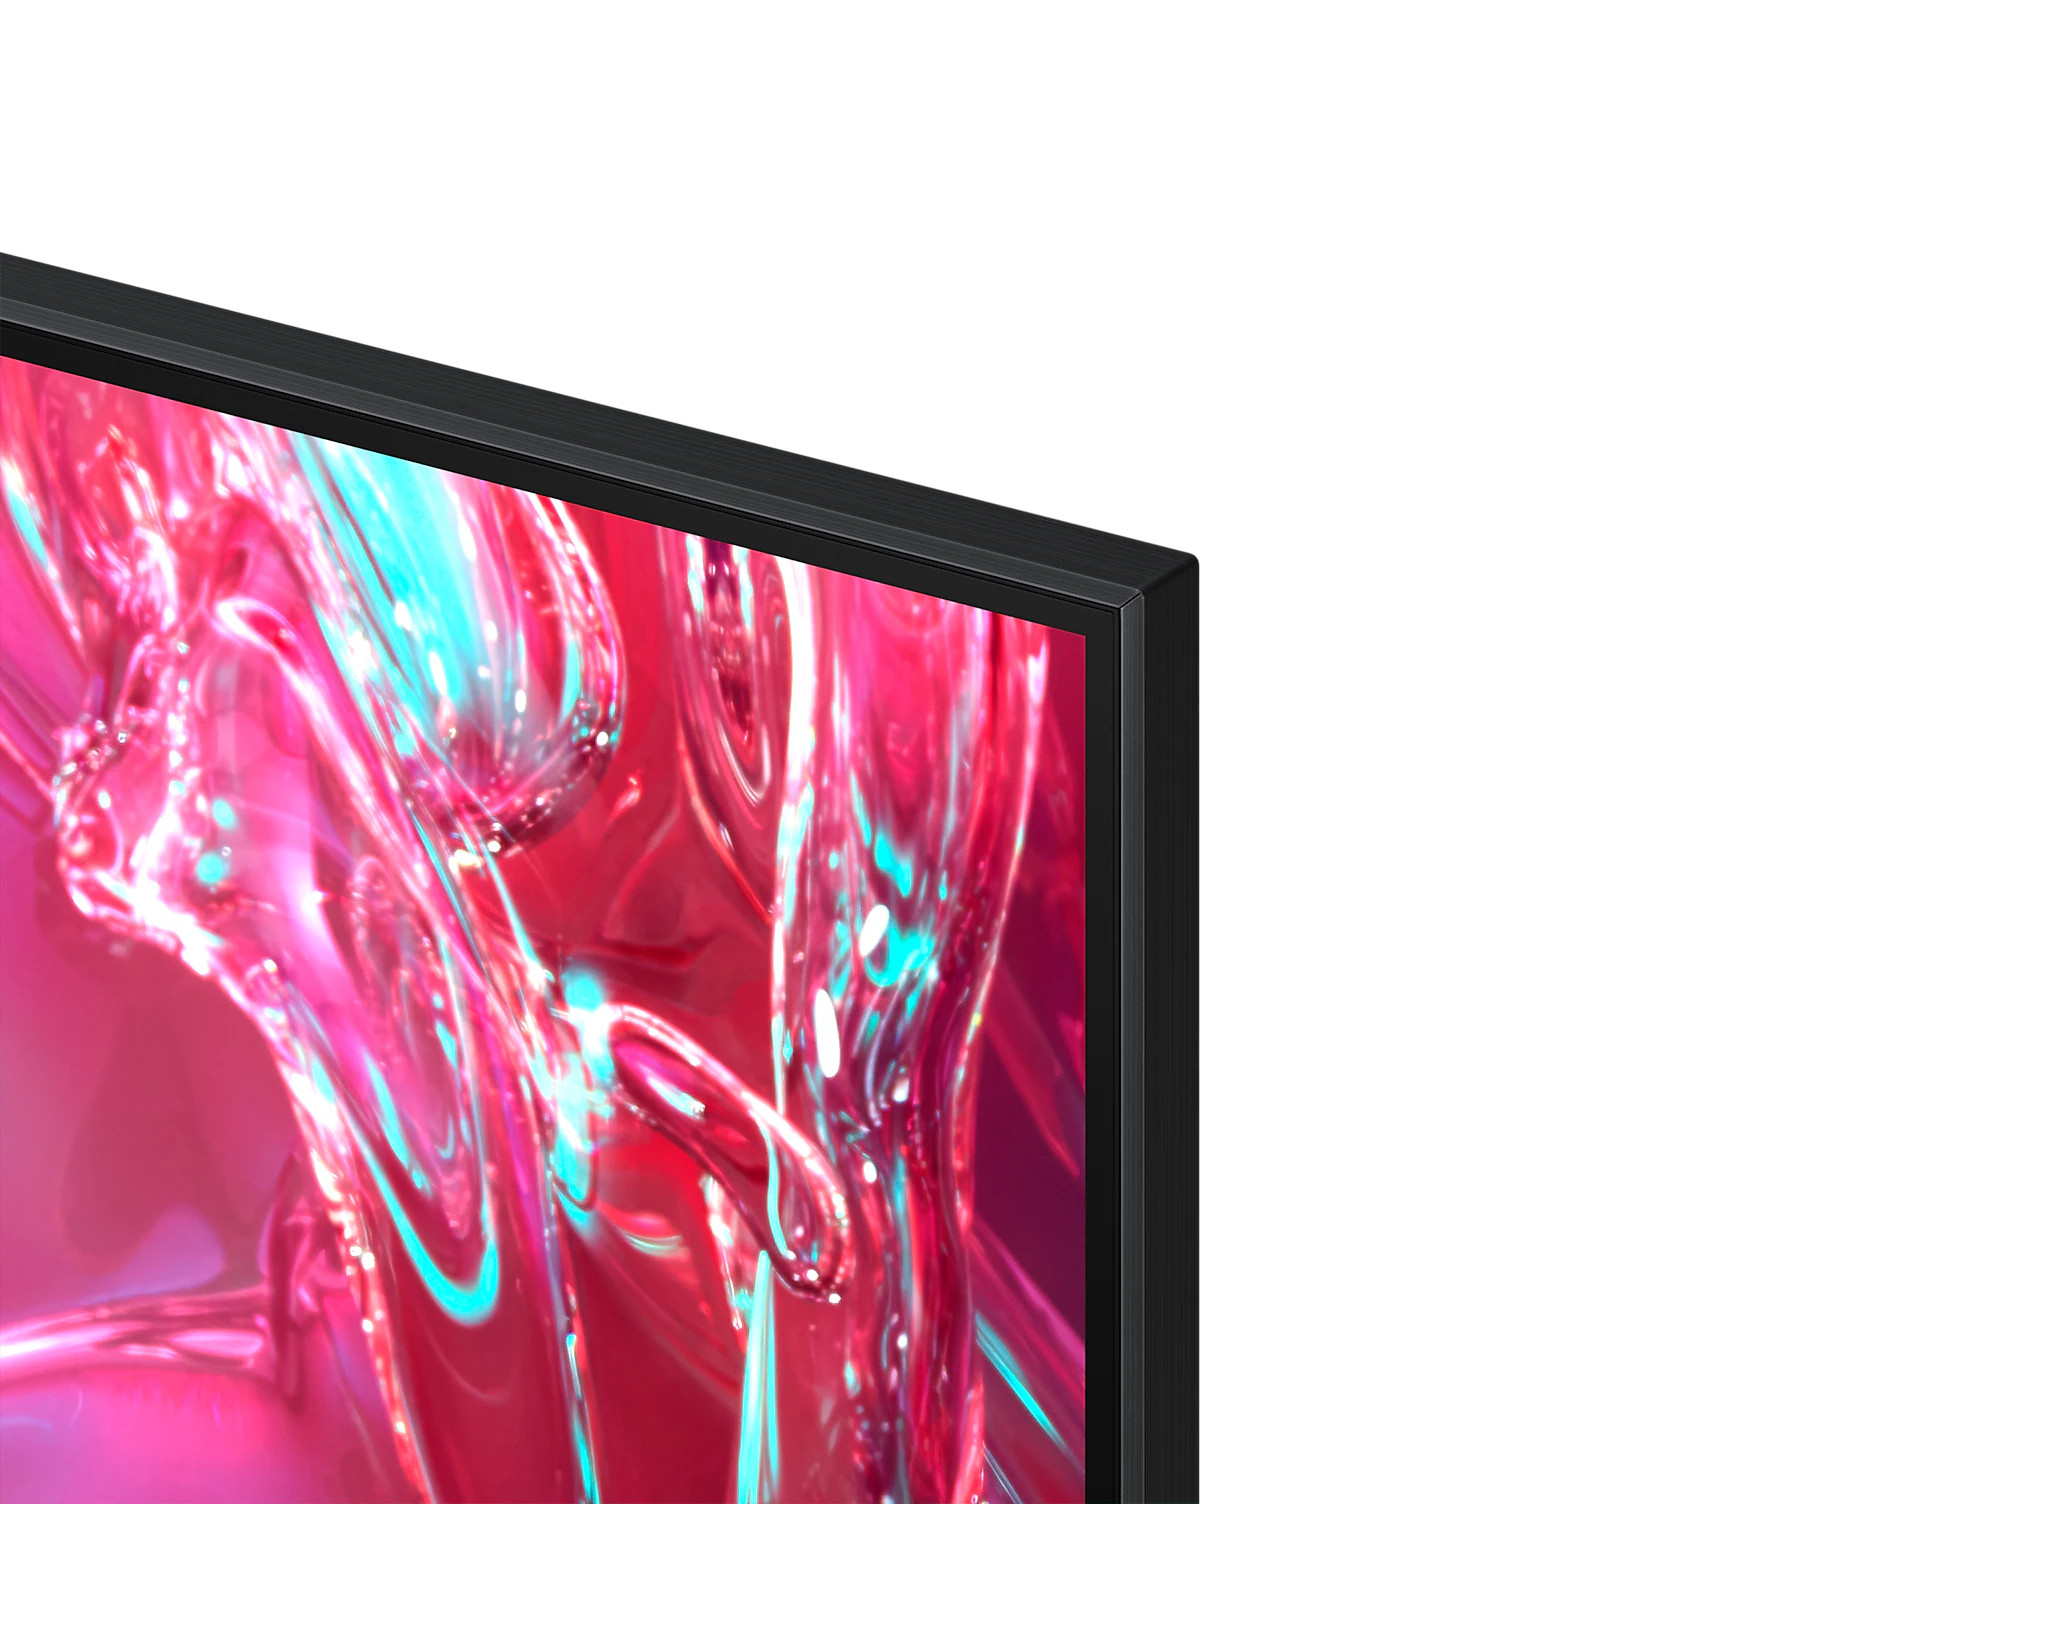 Smart Tivi Crystal Samsung 4K 98 inch UA98DU9000KXXV